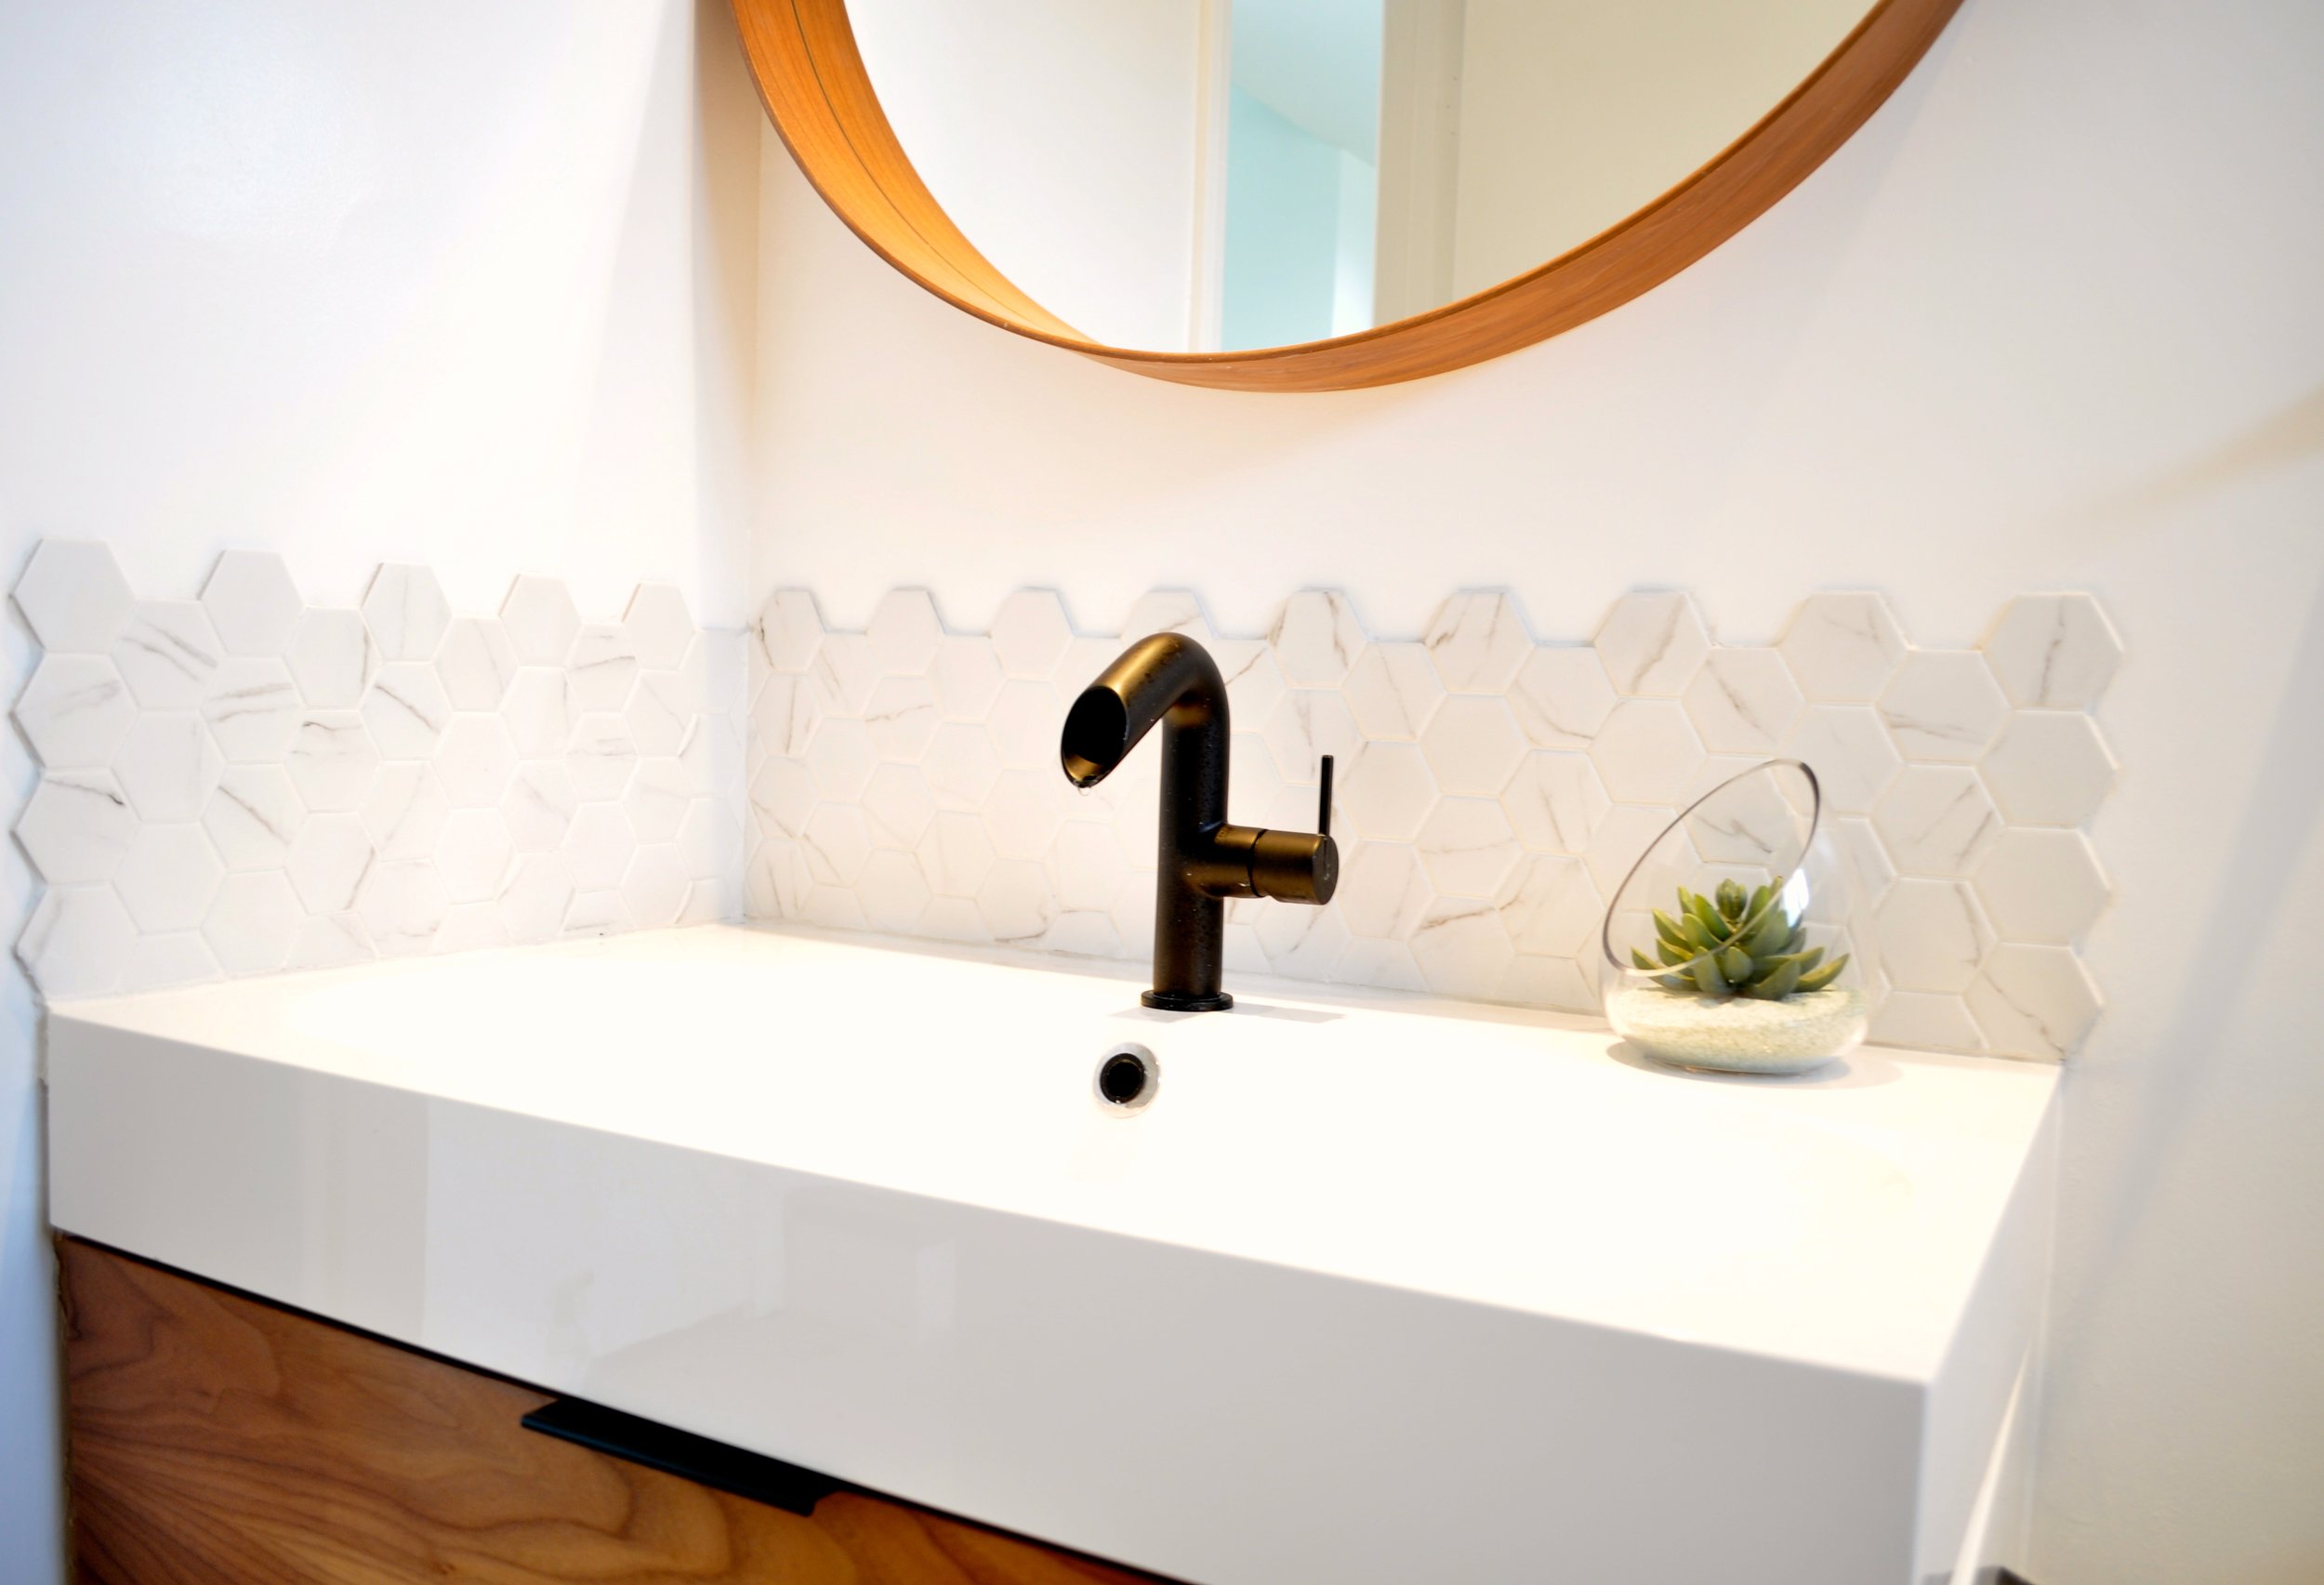 Boutique Interior Design Studio, Tile Backsplash Bathroom Diy